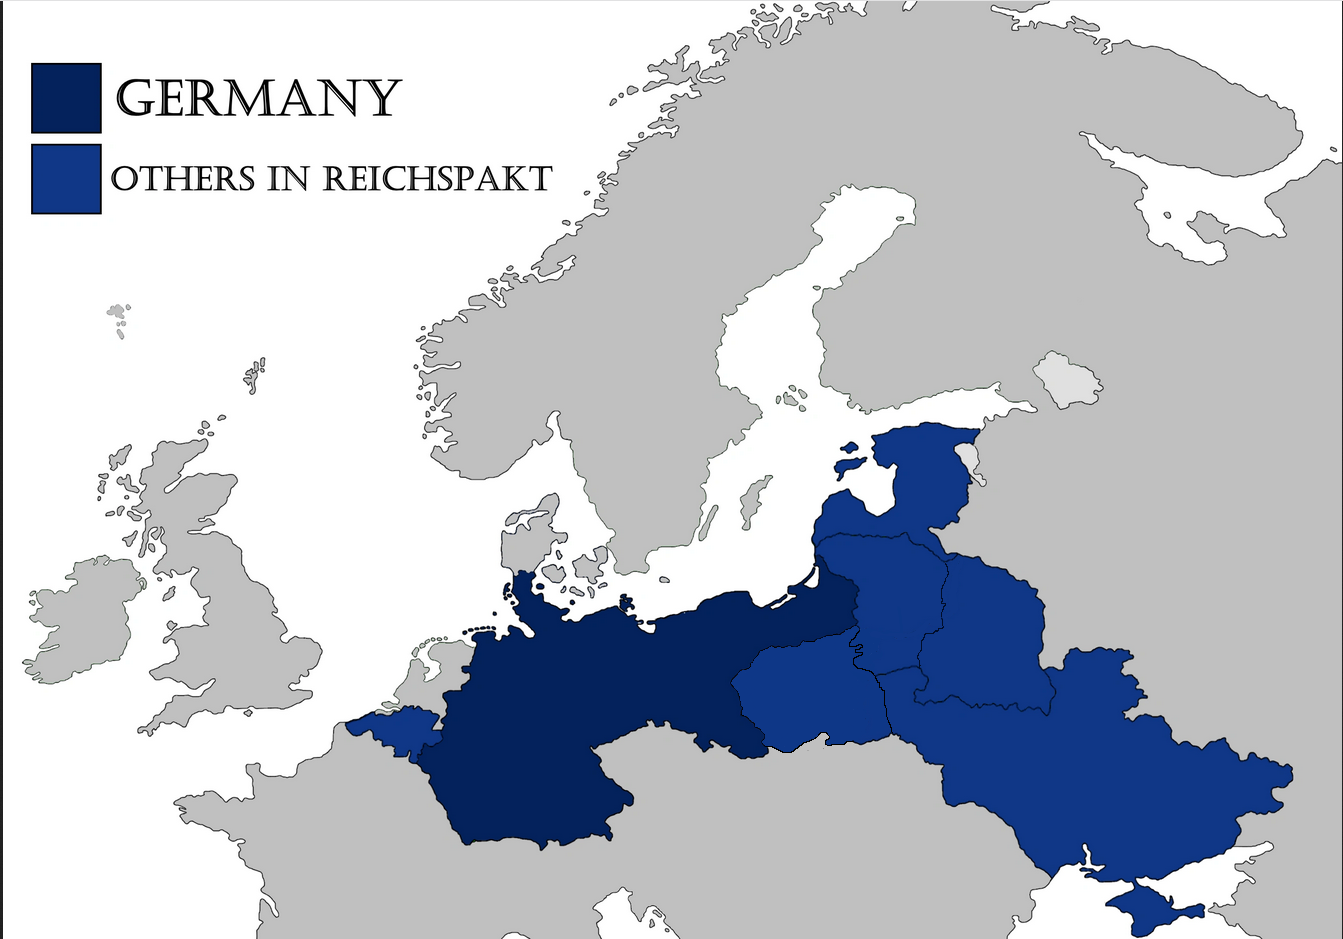 kaiserreich dominion of india